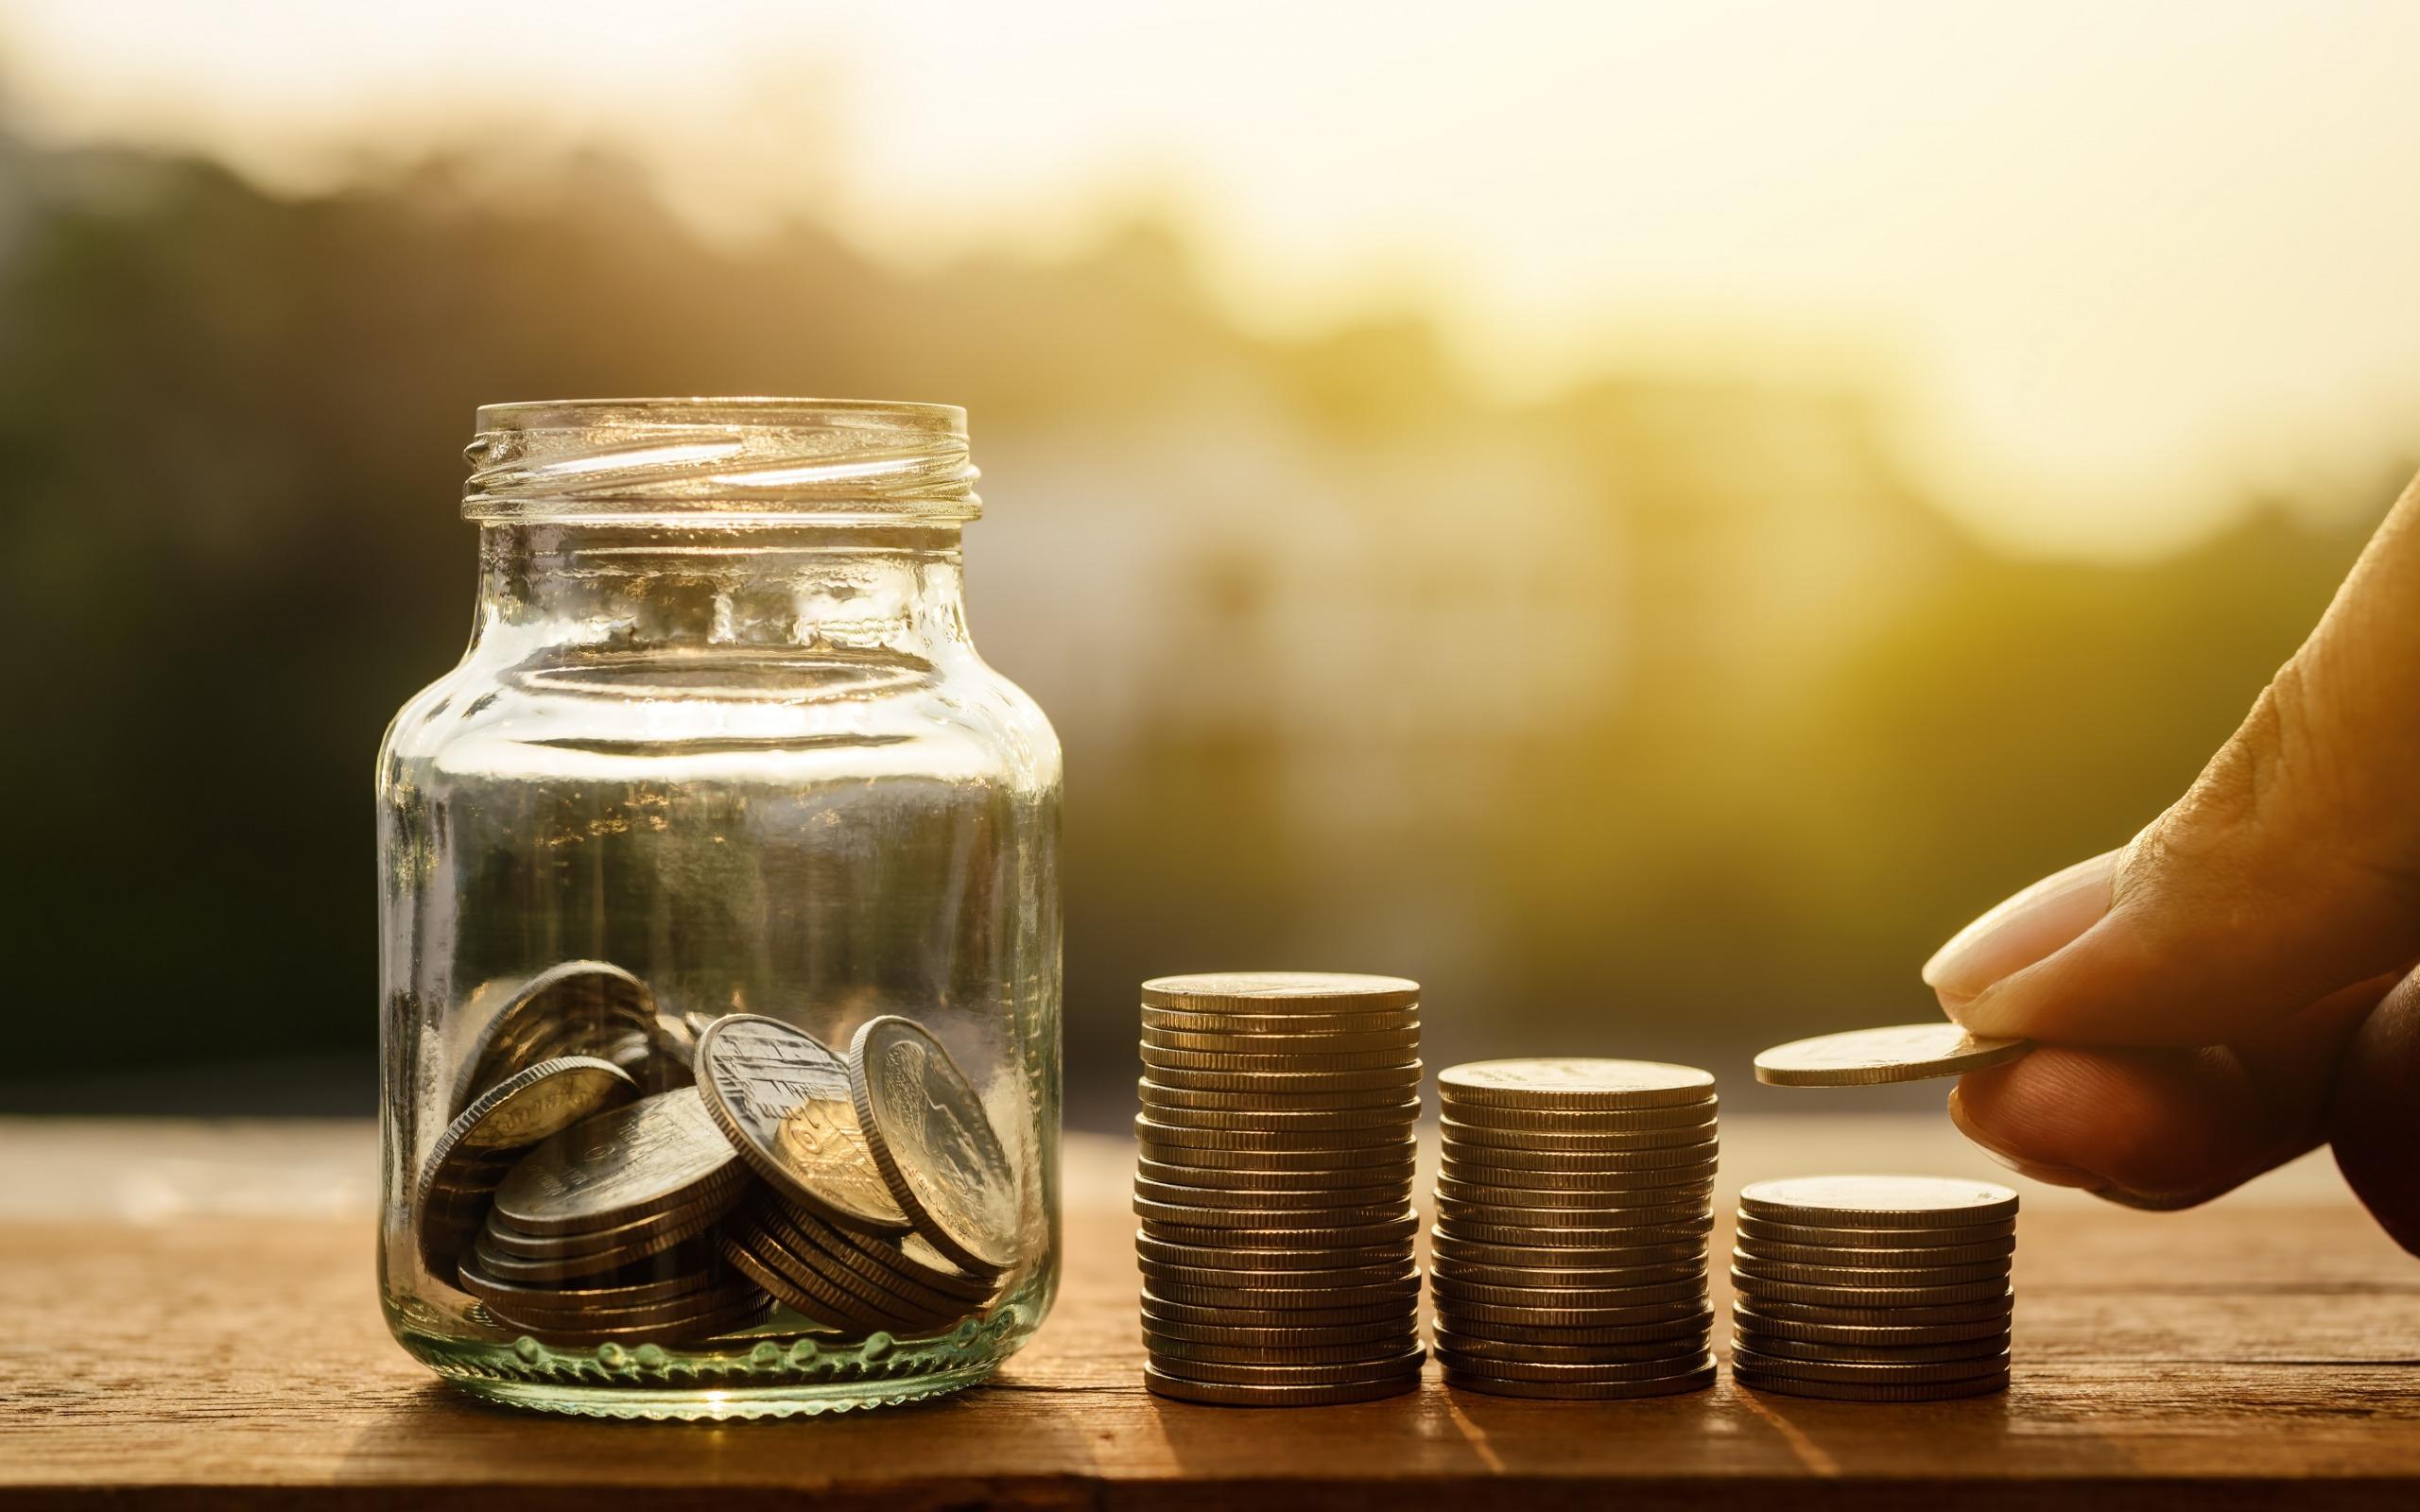 Download wallpaper glass bank with coins, piggy bank, savings money